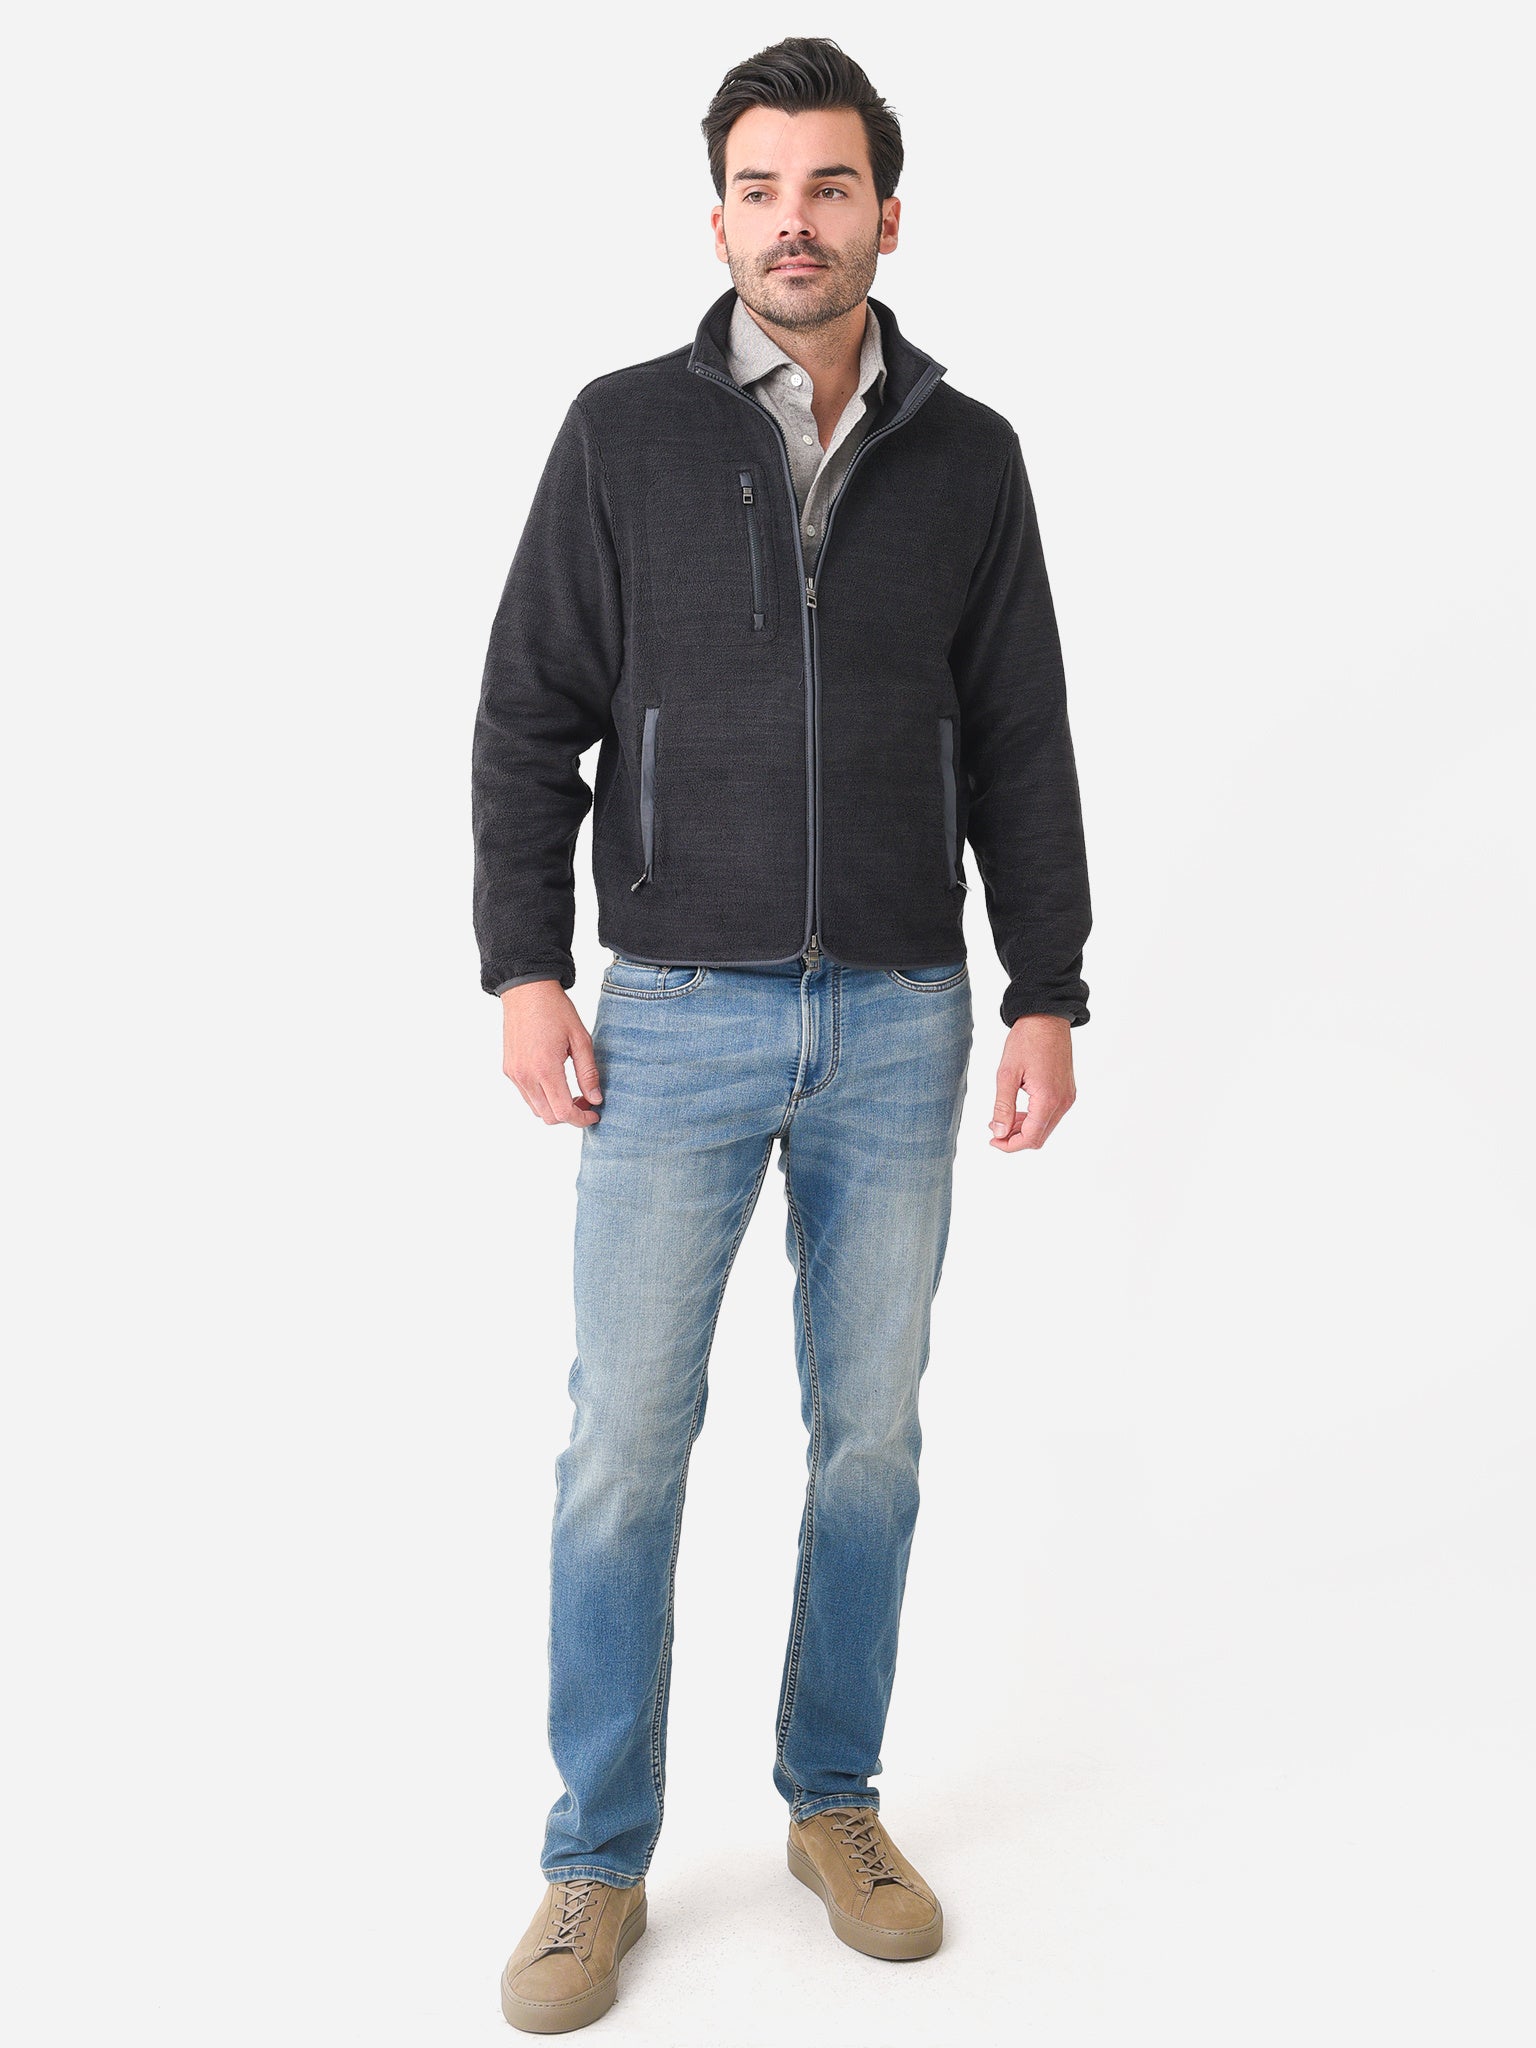 MZR - Bonded Fleece Full-Zip Jacket – J.Carroll